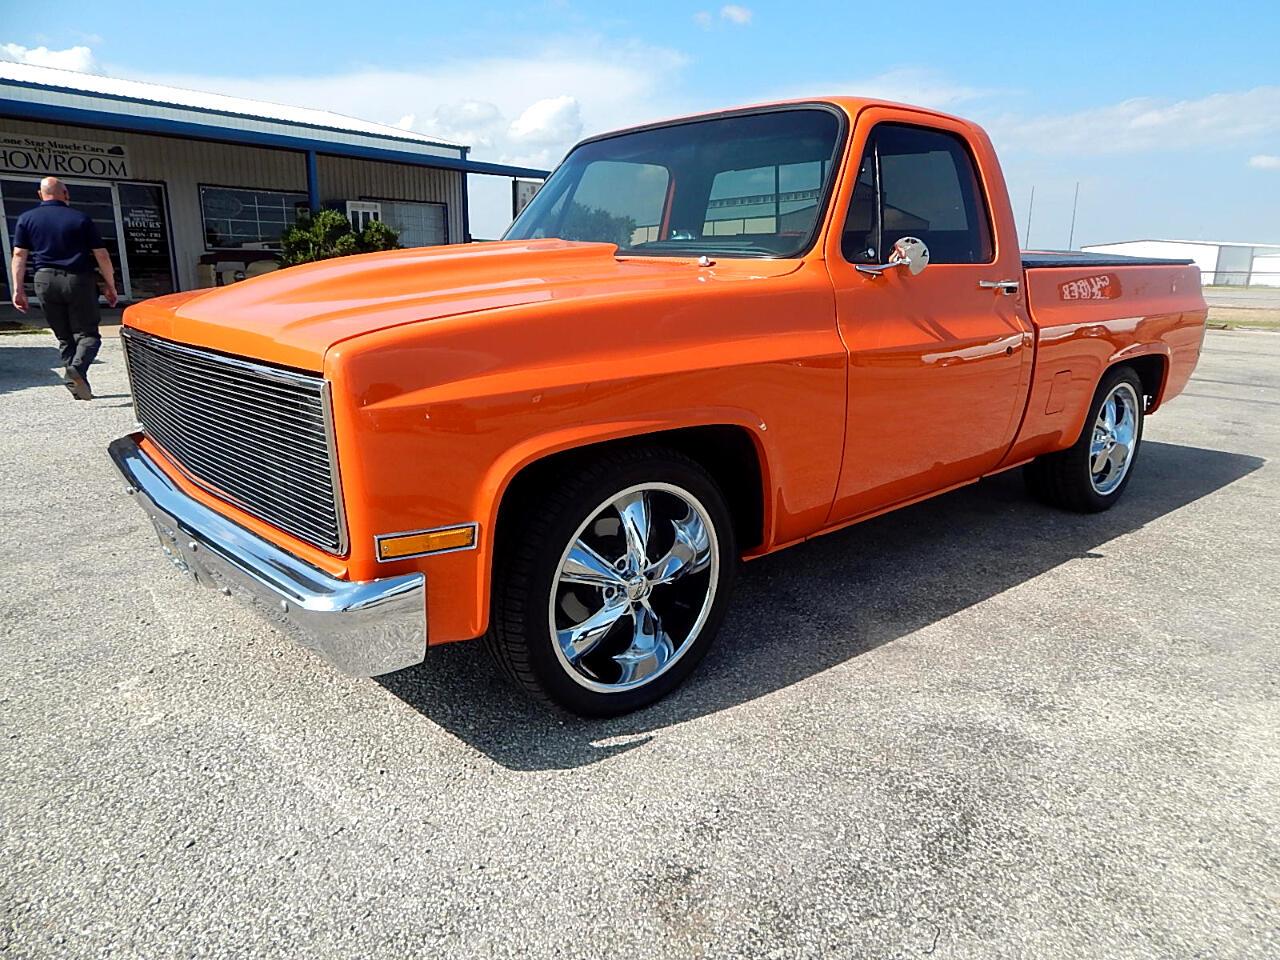 For Sale: 1985 Chevrolet C/K 10 in Wichita Falls, Texas for sale in Wichita Falls, TX